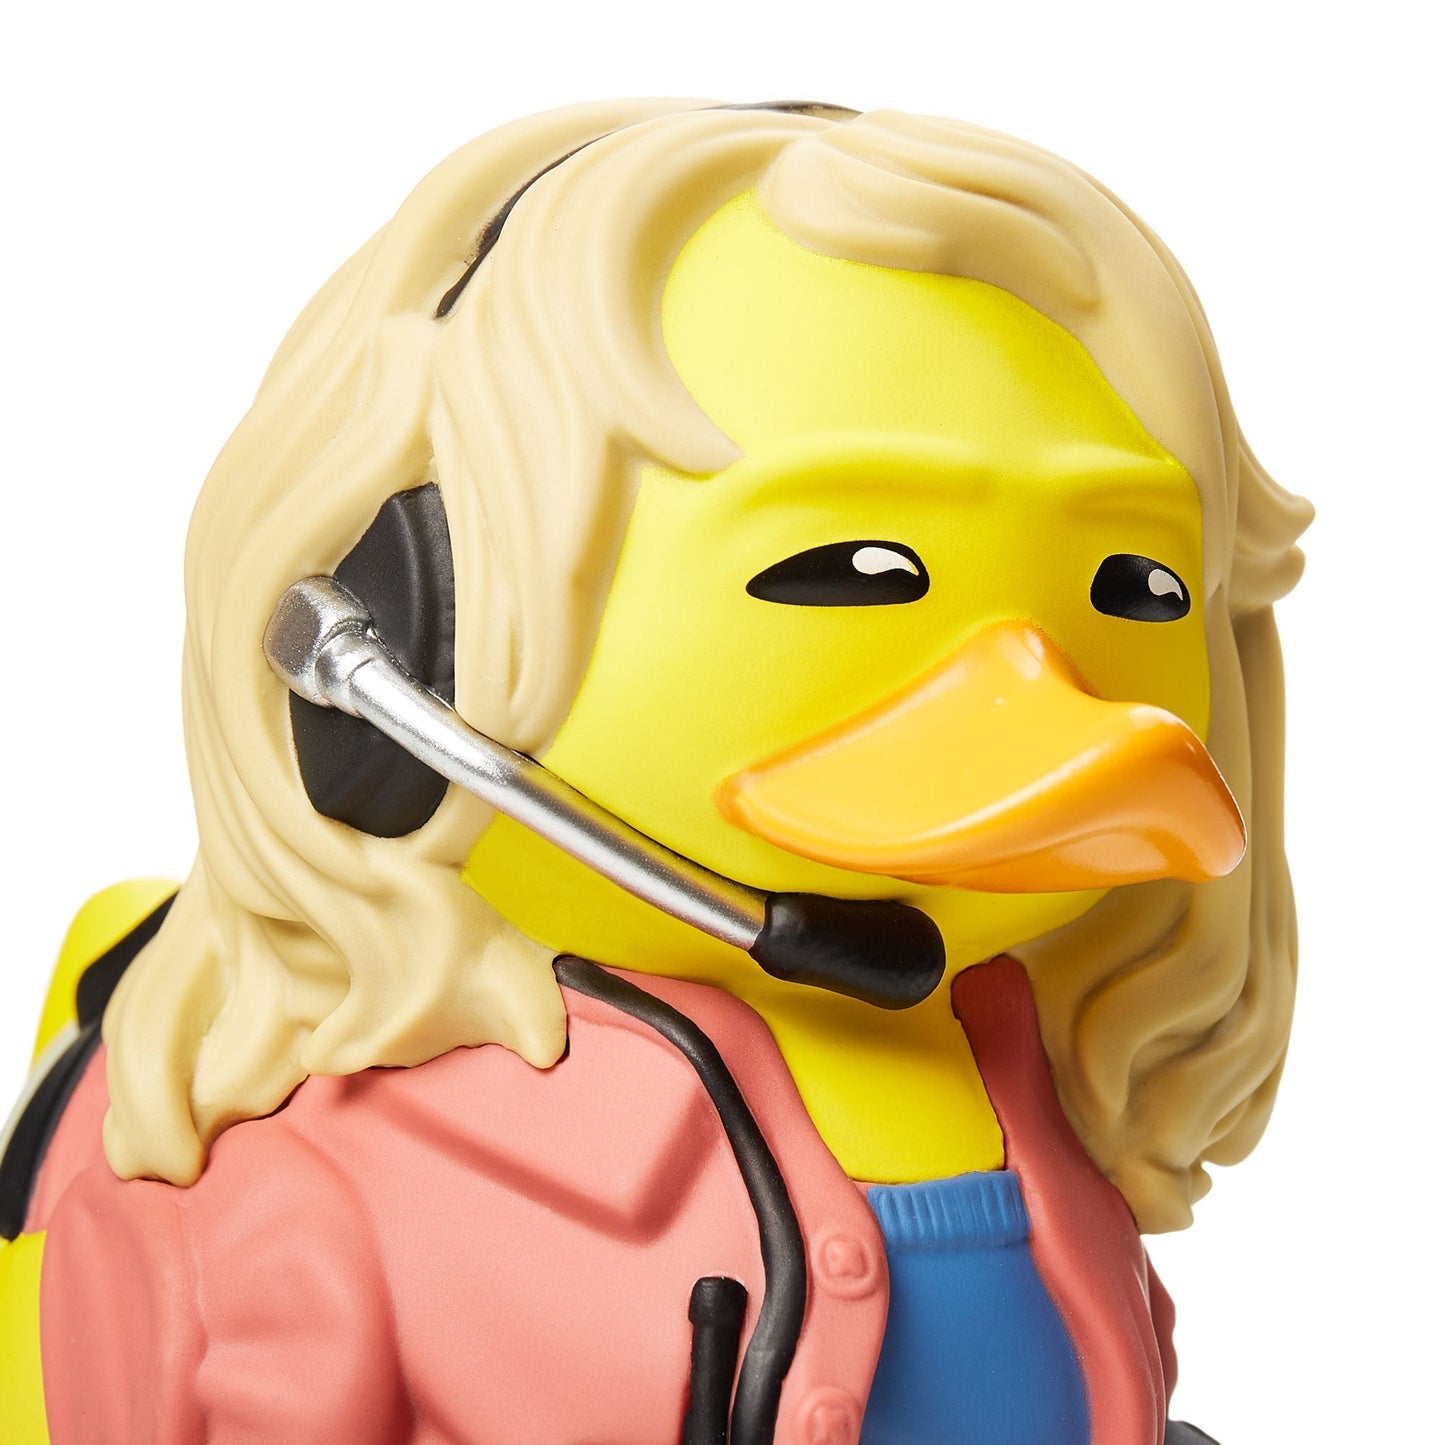 Duck Dr. Ellie Sattler